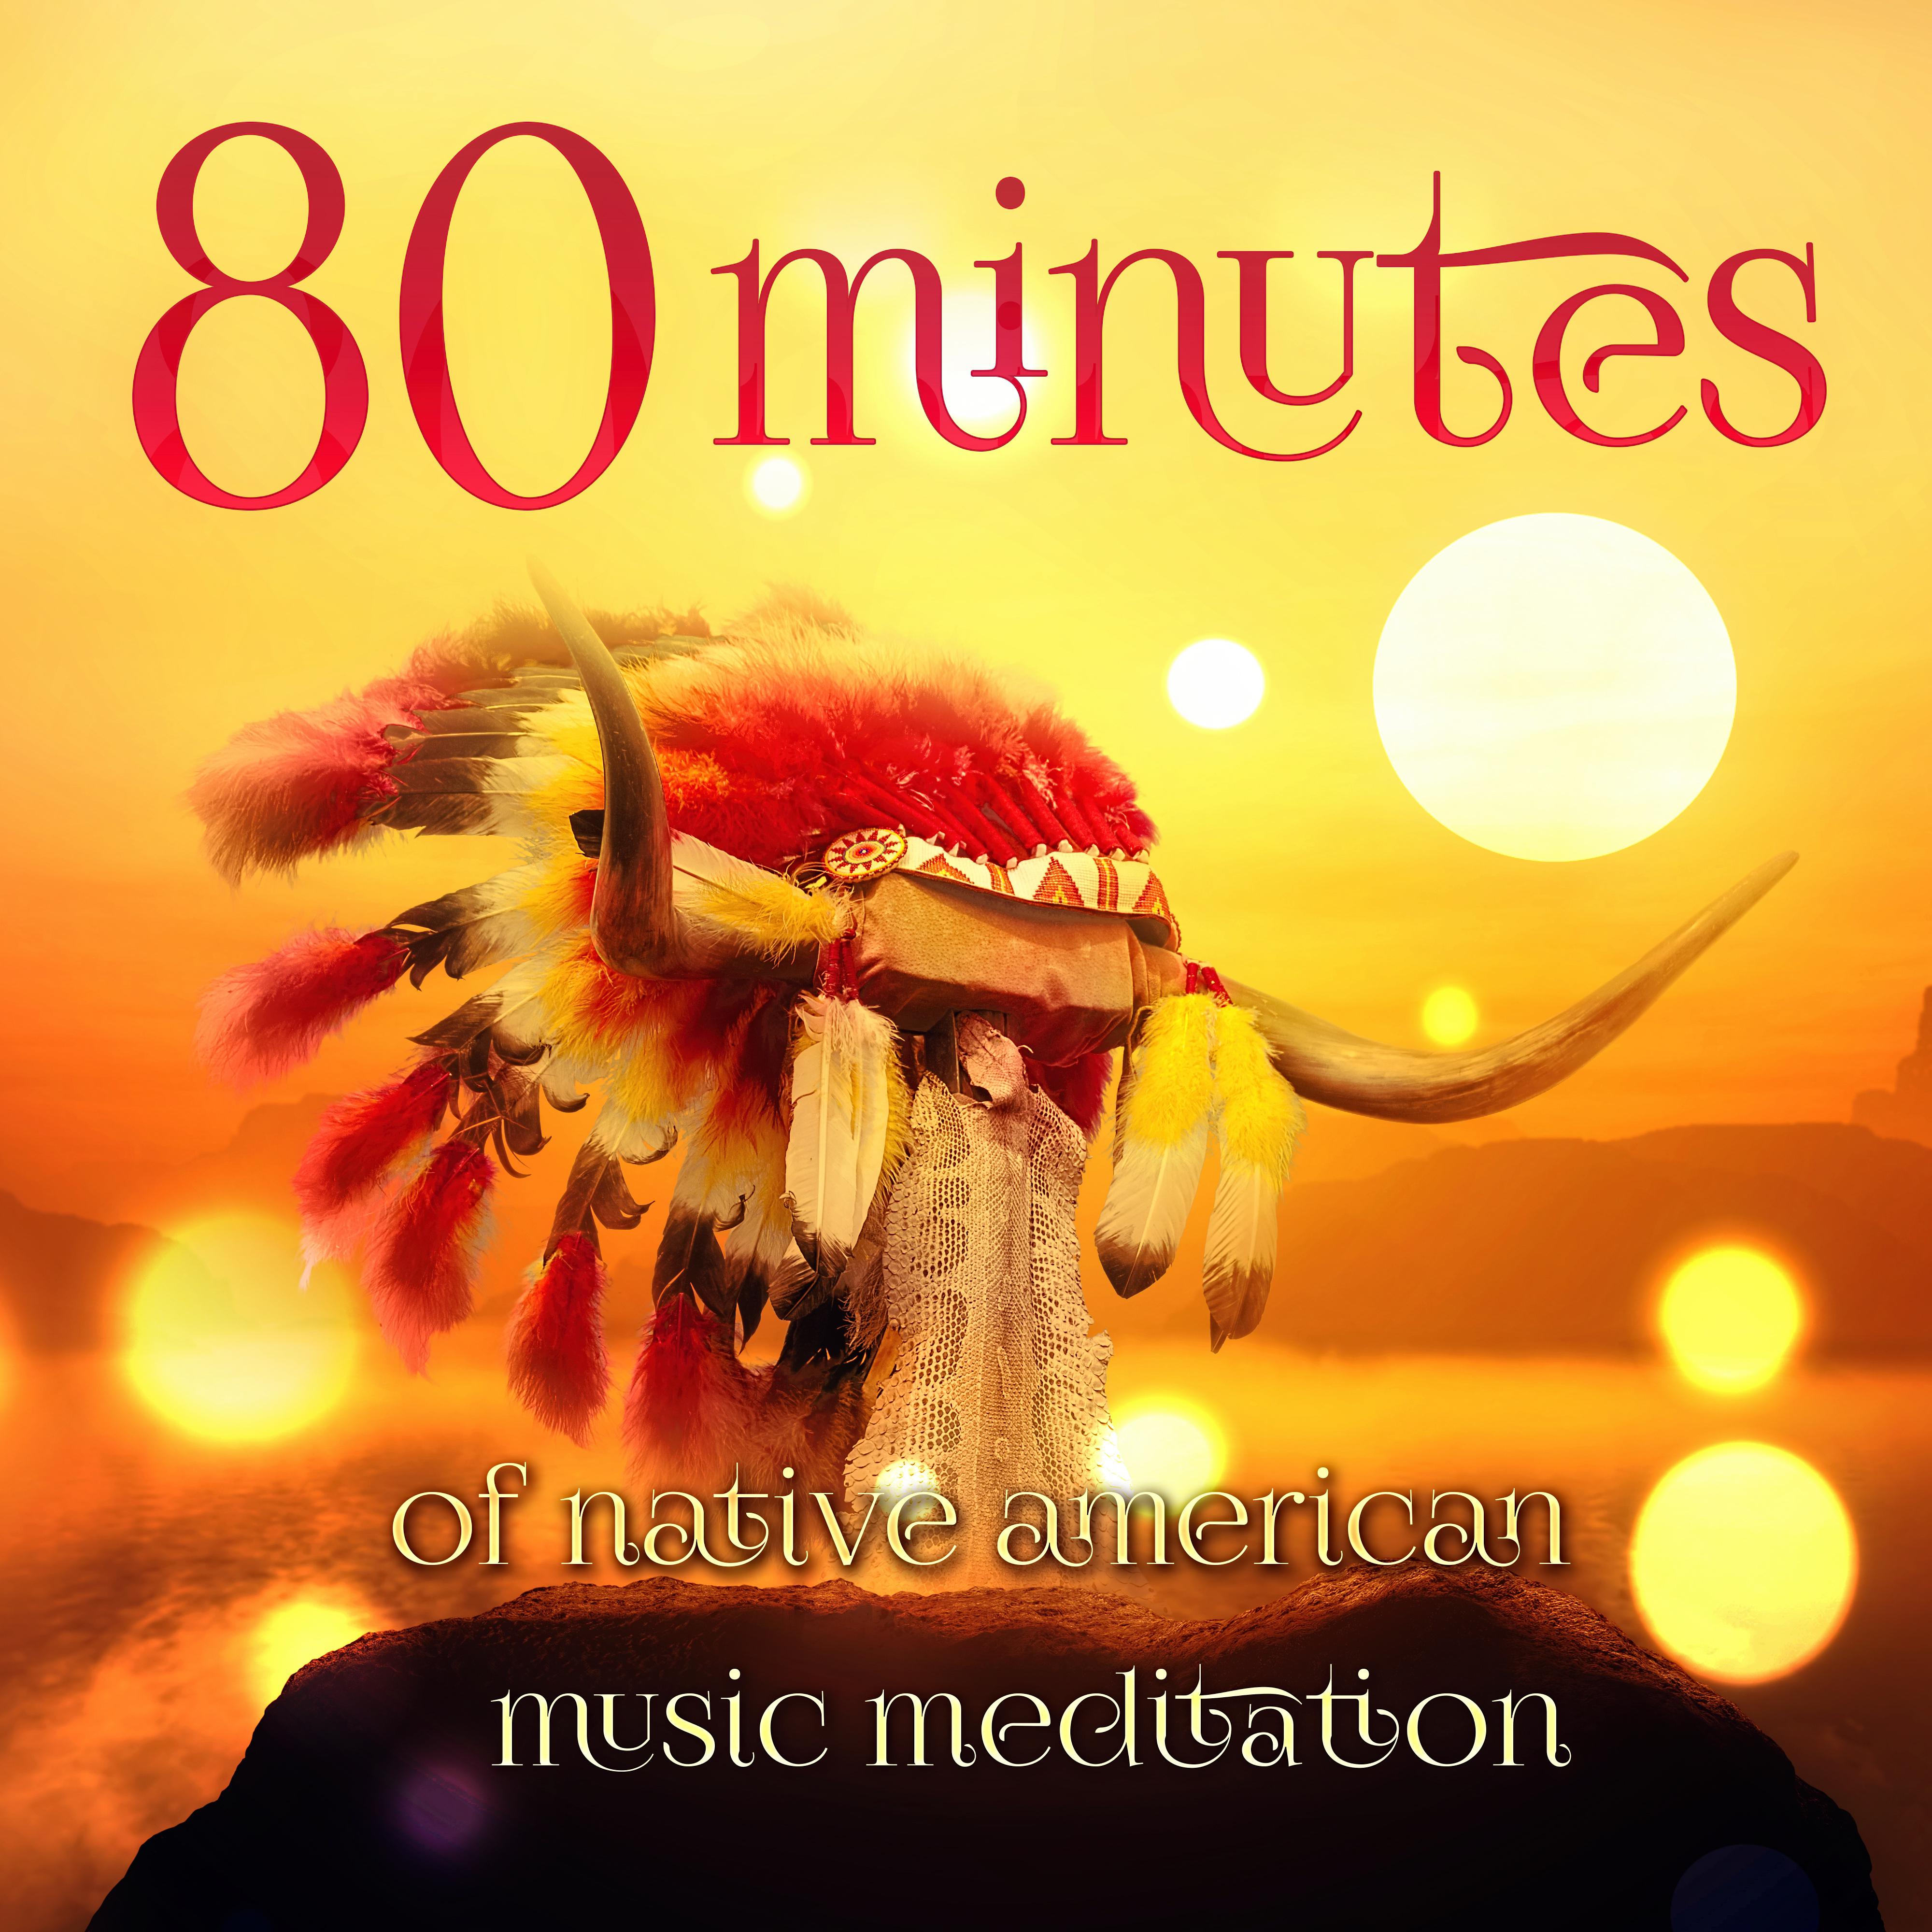 80 Minutes of Native American Flute Meditations - Yoga Music, Massage Music, Spa & Wellness, Relaxation Meditation